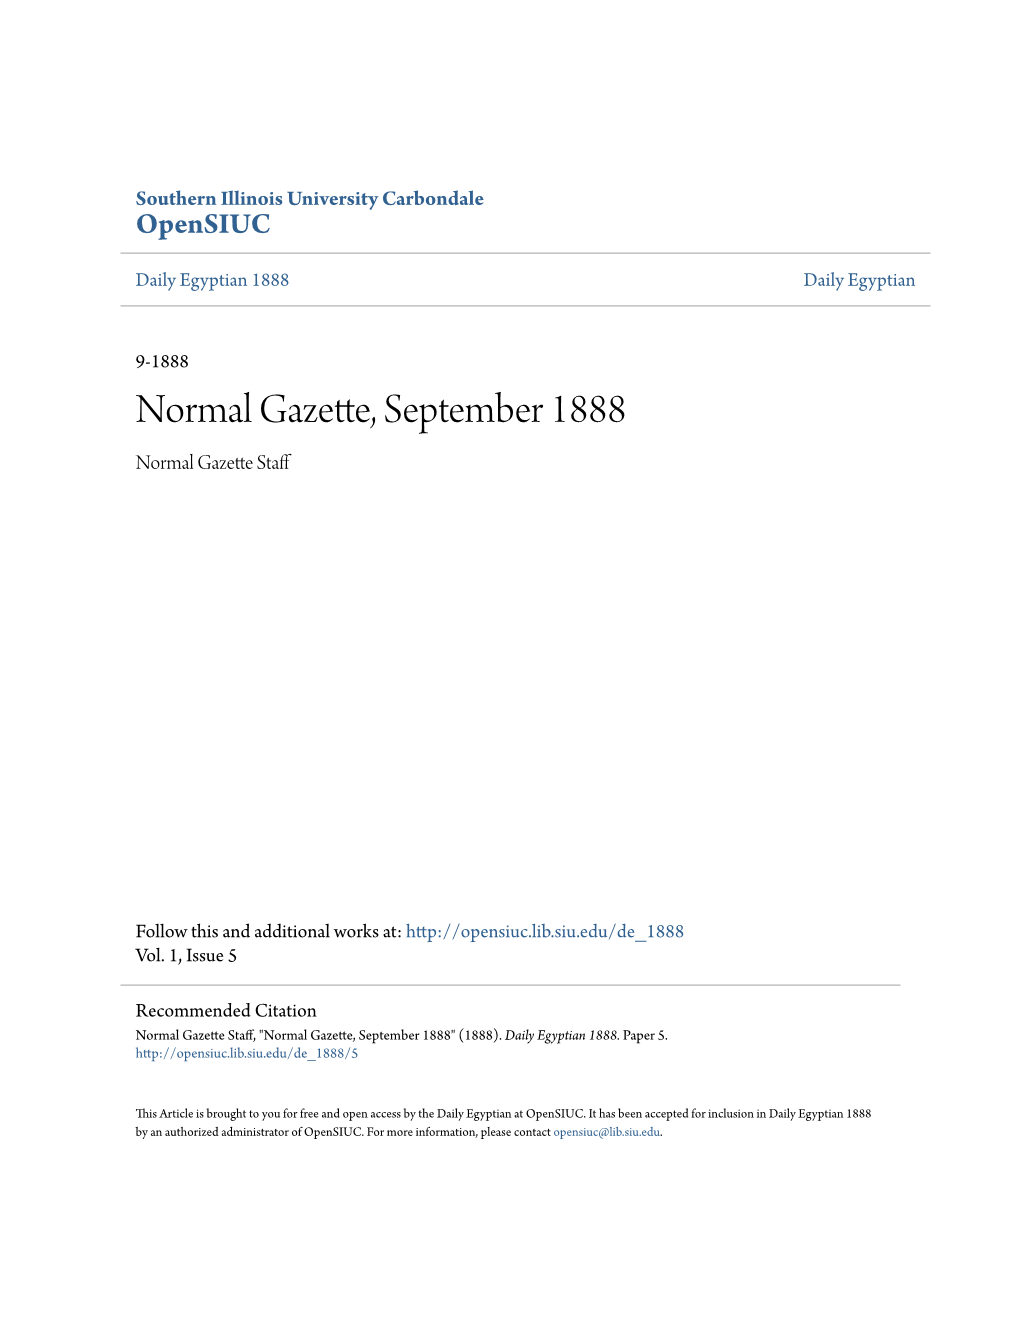 Normal Gazette, September 1888 Normal Gazette Staff